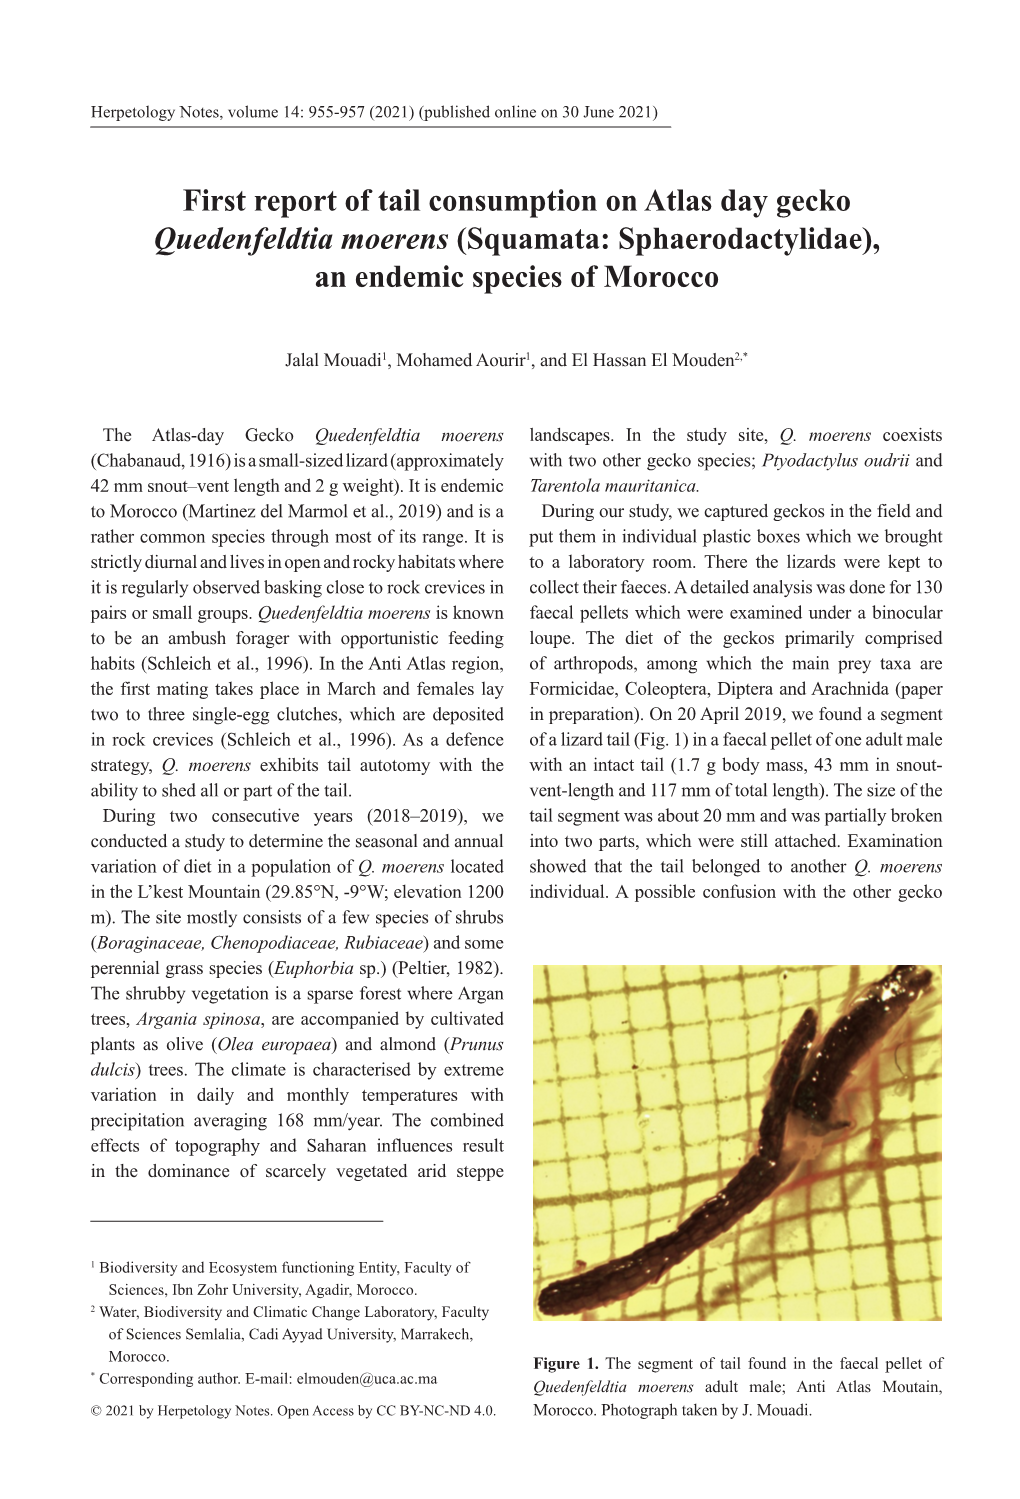 (Squamata: Sphaerodactylidae), an Endemic Species of Morocco